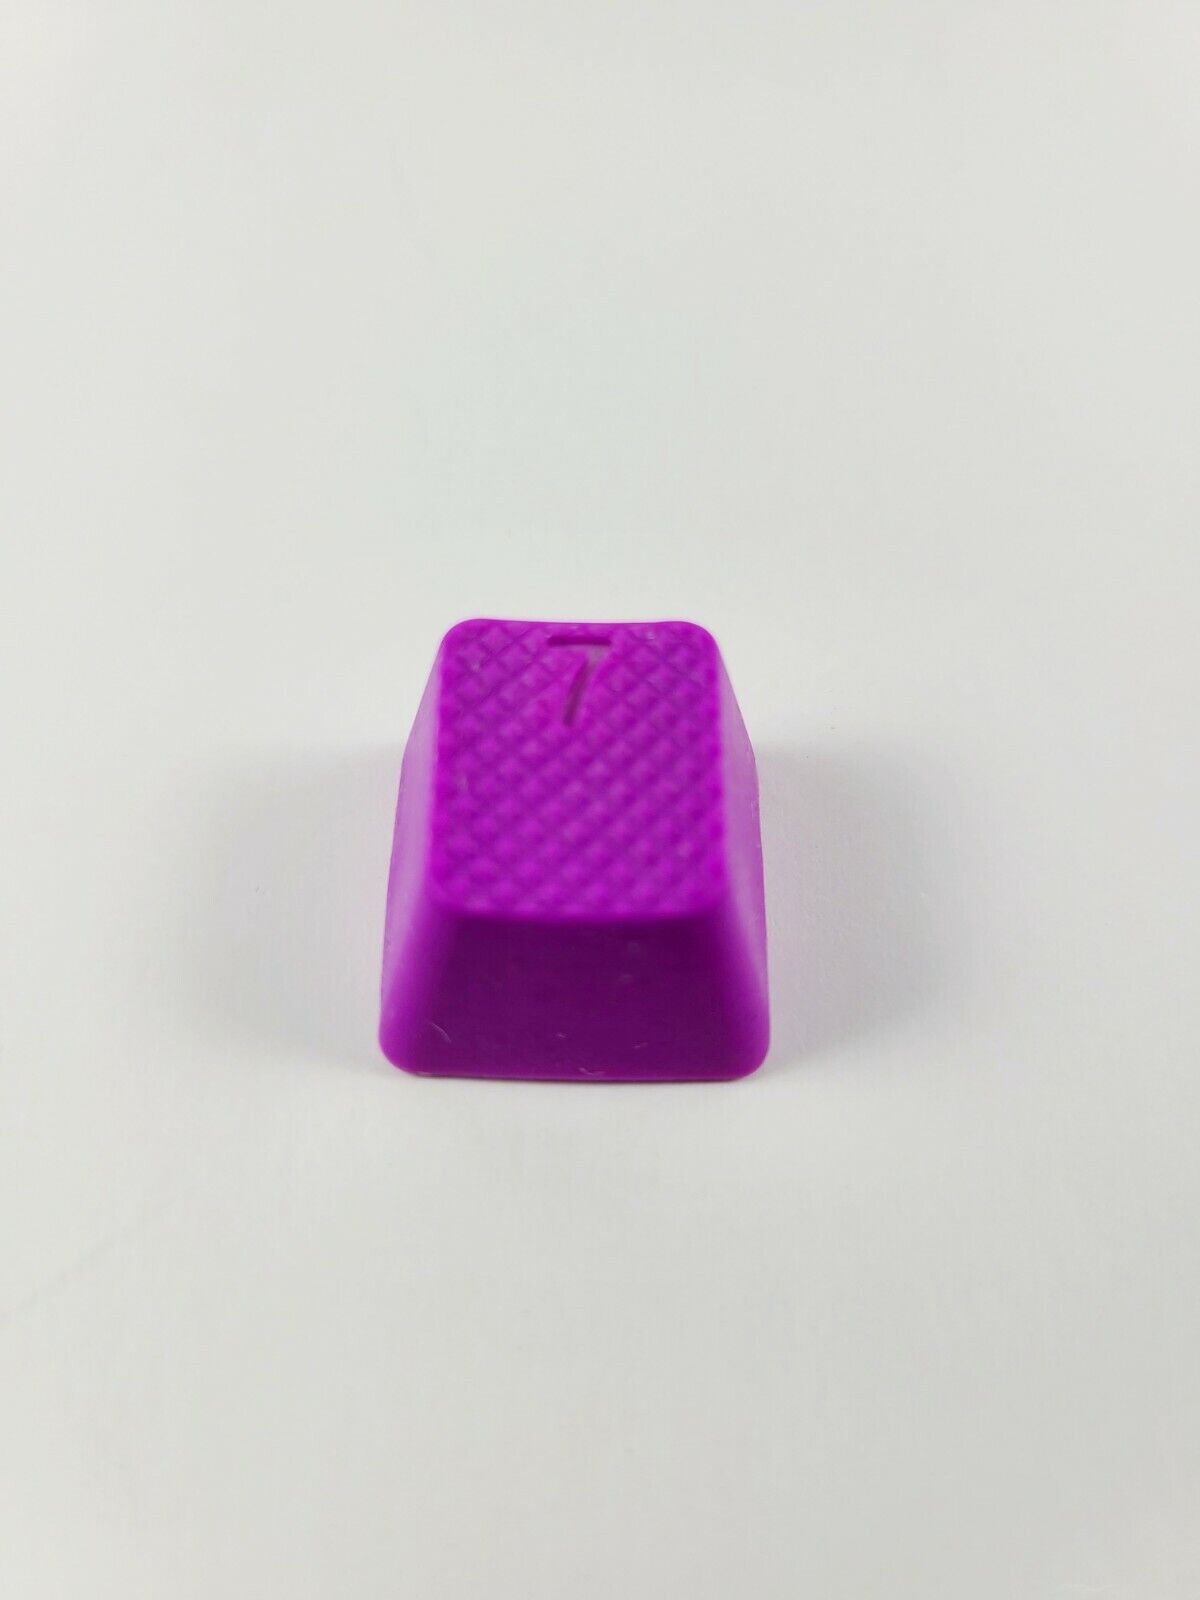 RARE Tai-Hao Neon Purple Rubber 7 Keycap Doubleshot Keycap For Cherry Mx